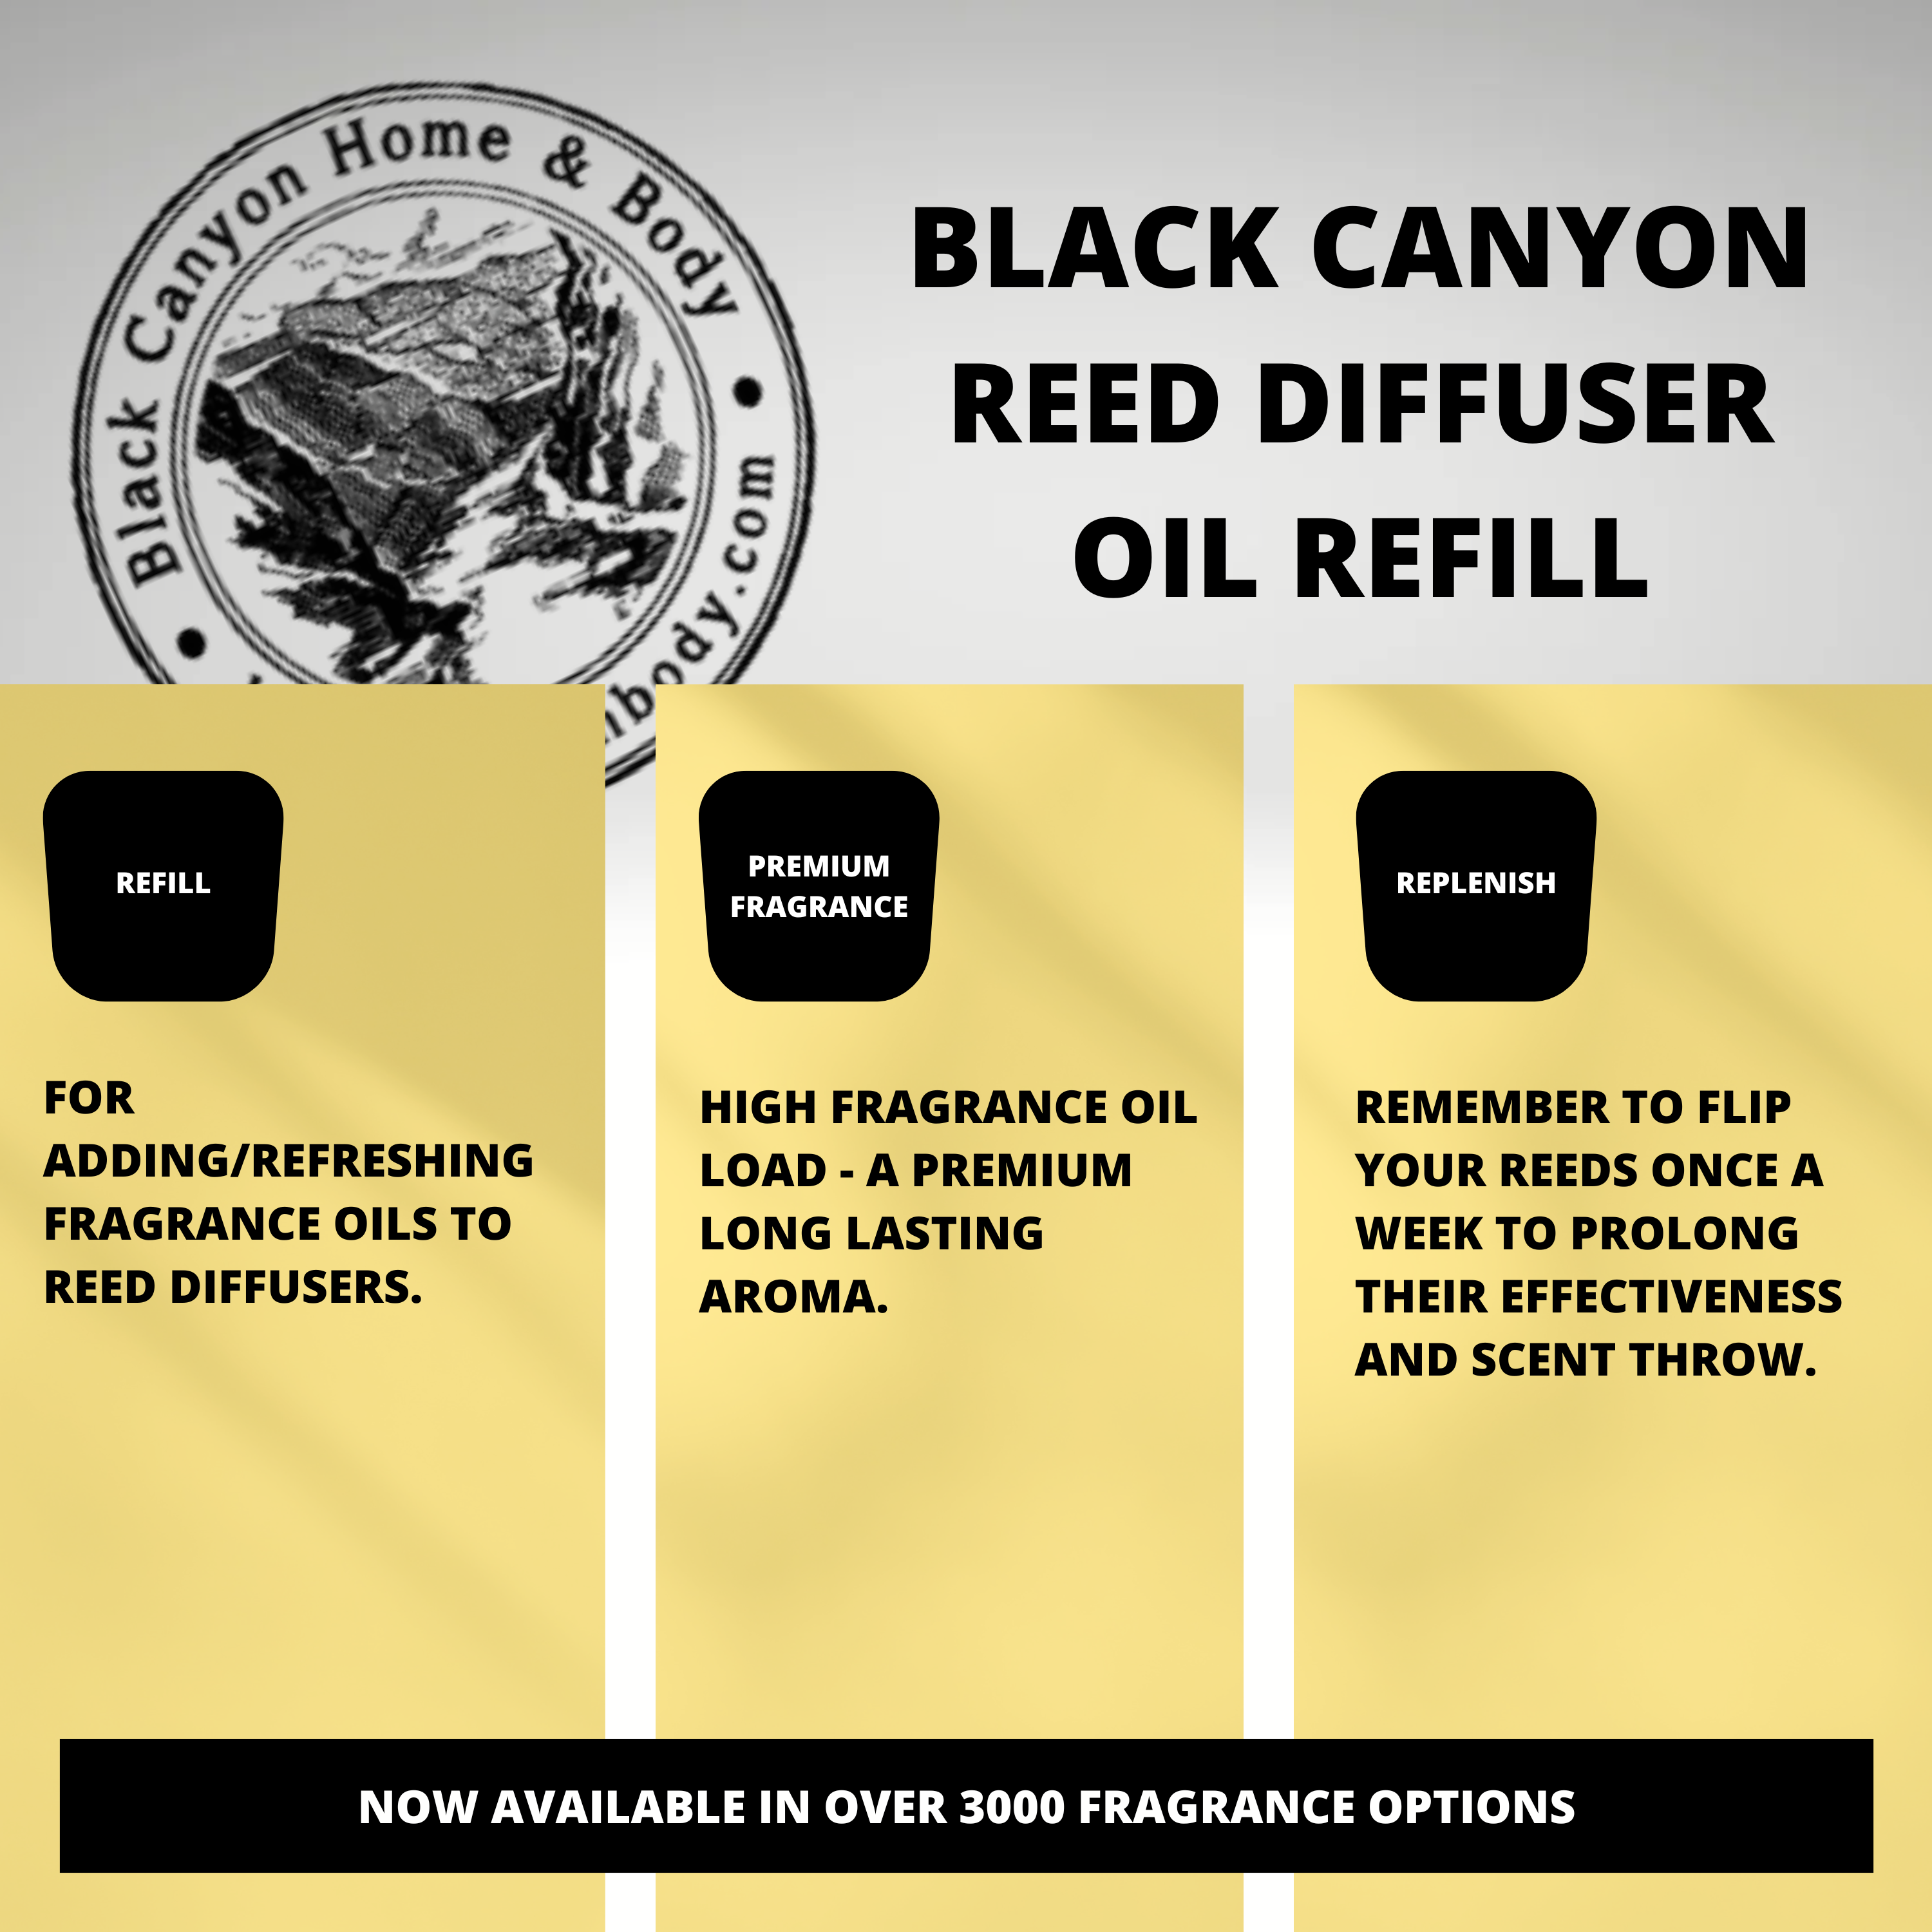 Black Canyon Wild Blackberry Vanilla Scented Reed Diffuser Oil Refill